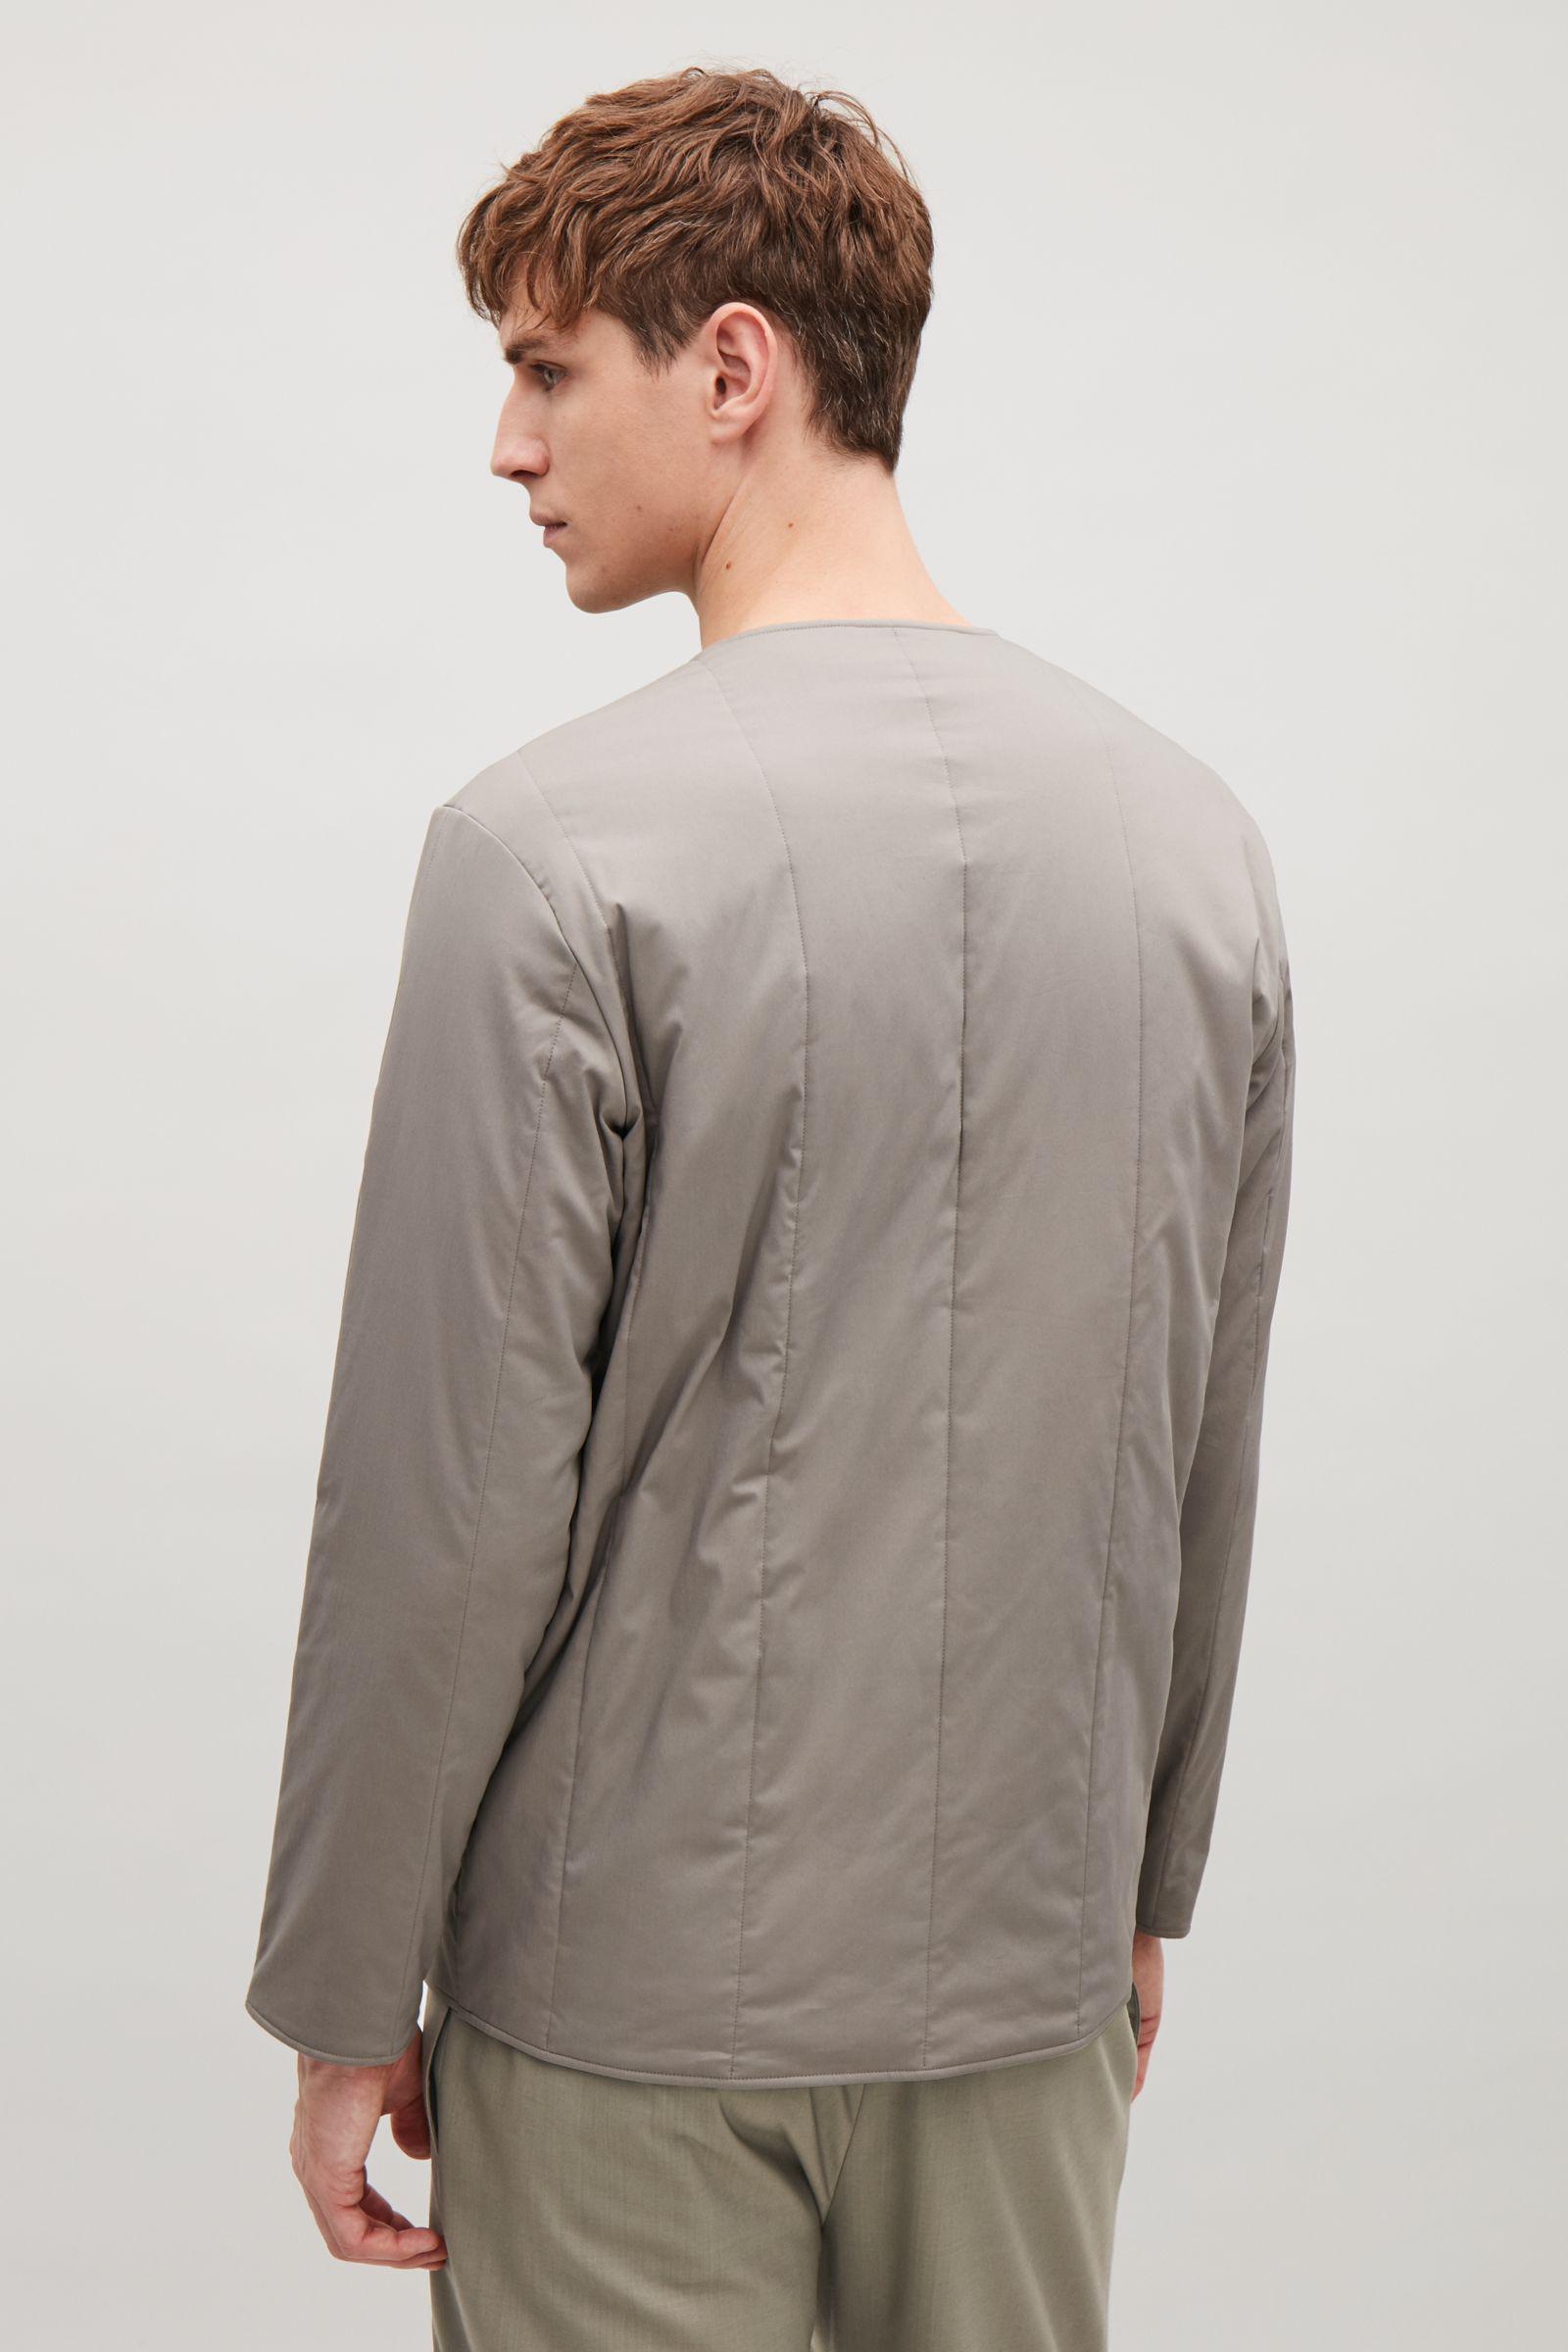 COS Cotton Padded V-neck Jacket for Men - Lyst